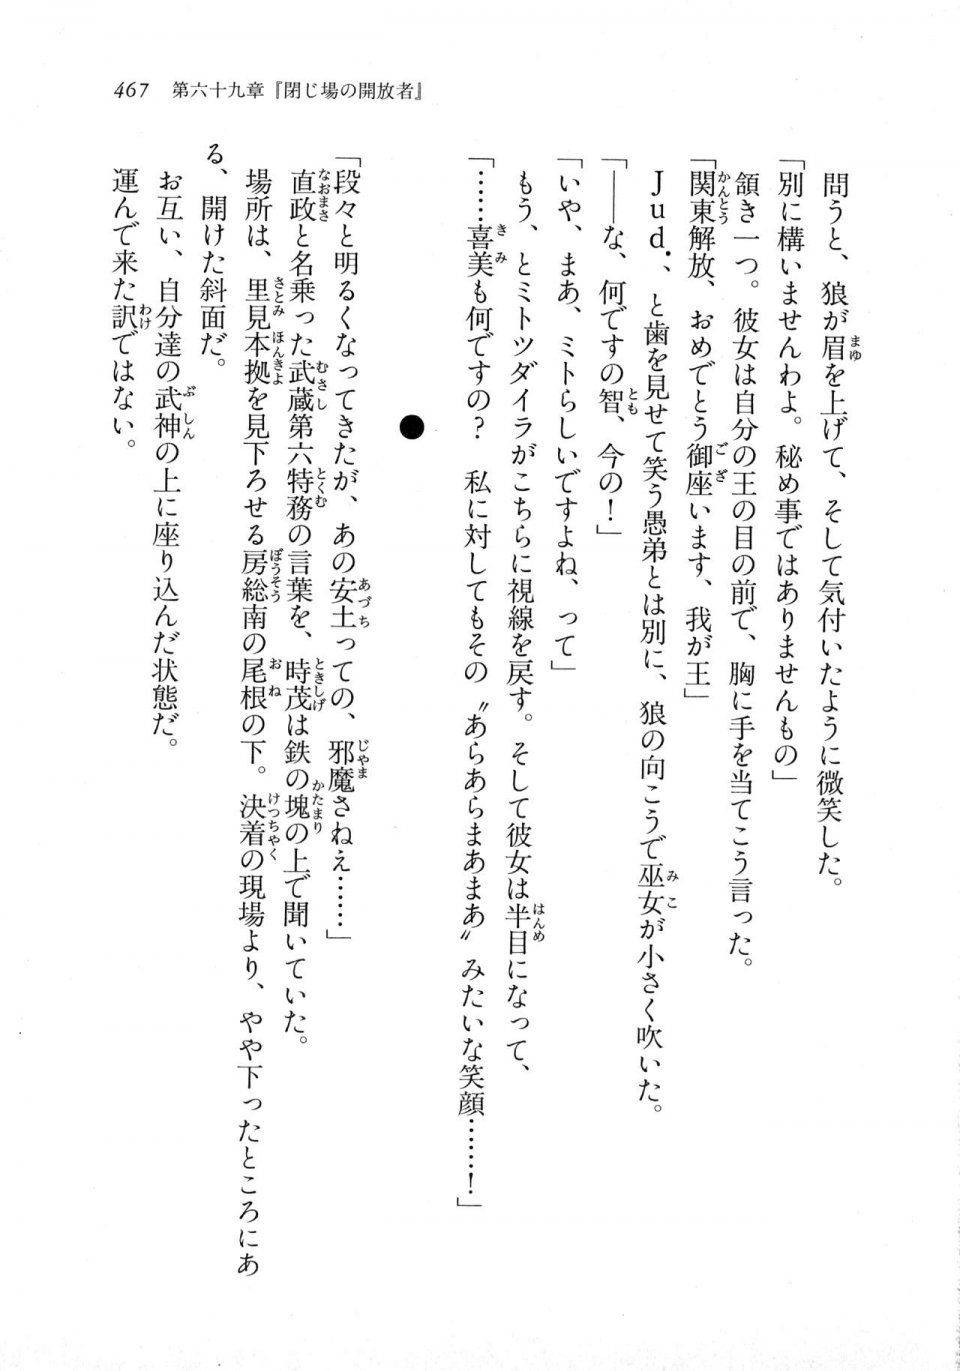 Kyoukai Senjou no Horizon LN Vol 18(7C) Part 1 - Photo #467